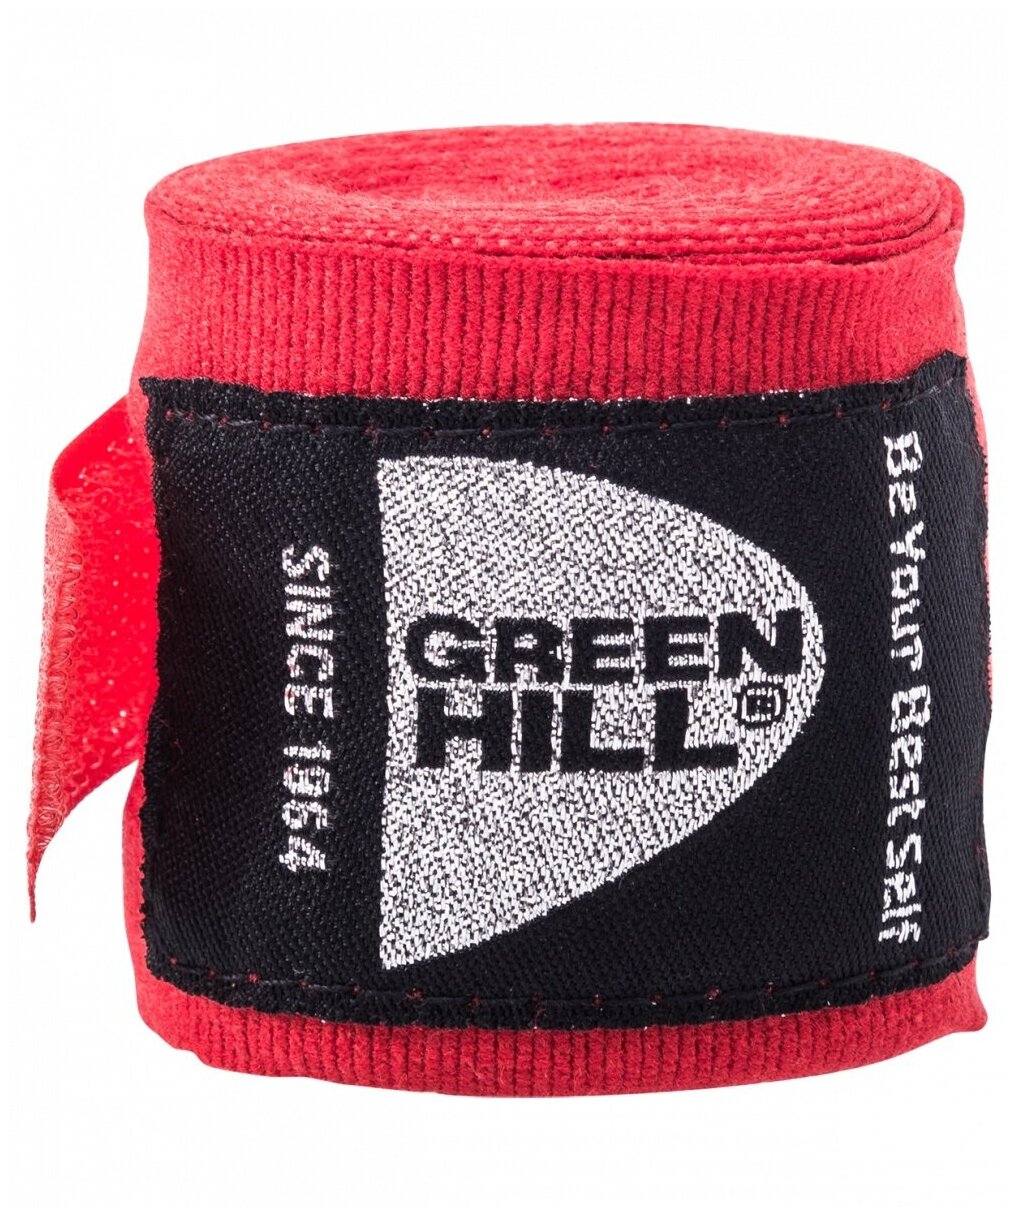   Green Hill BP-6232c 3,5 